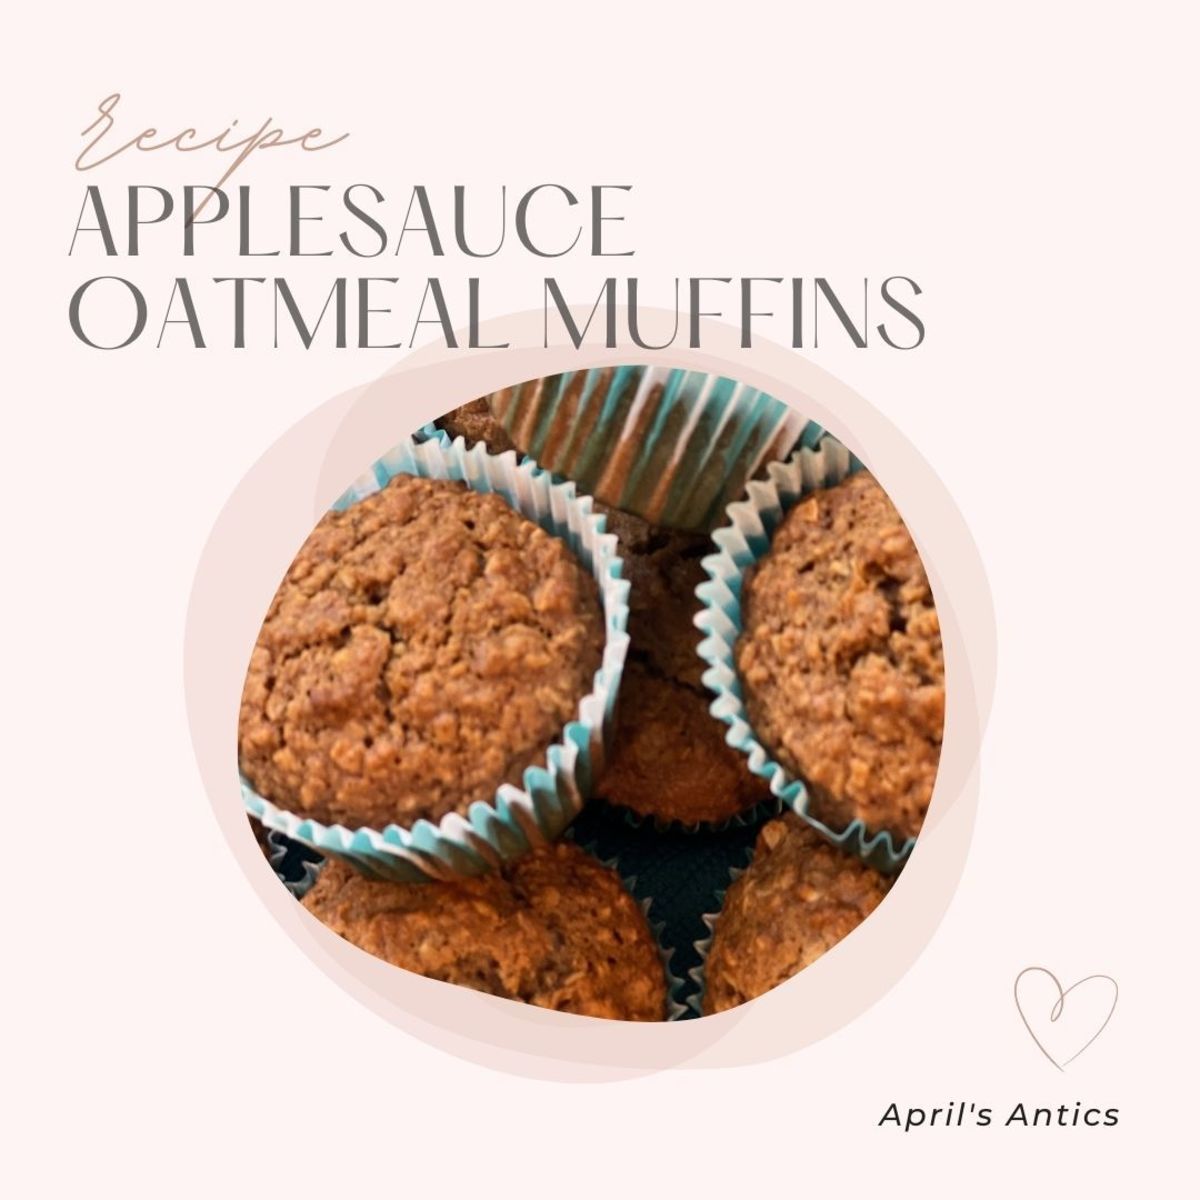 Applesauce oatmeal muffins